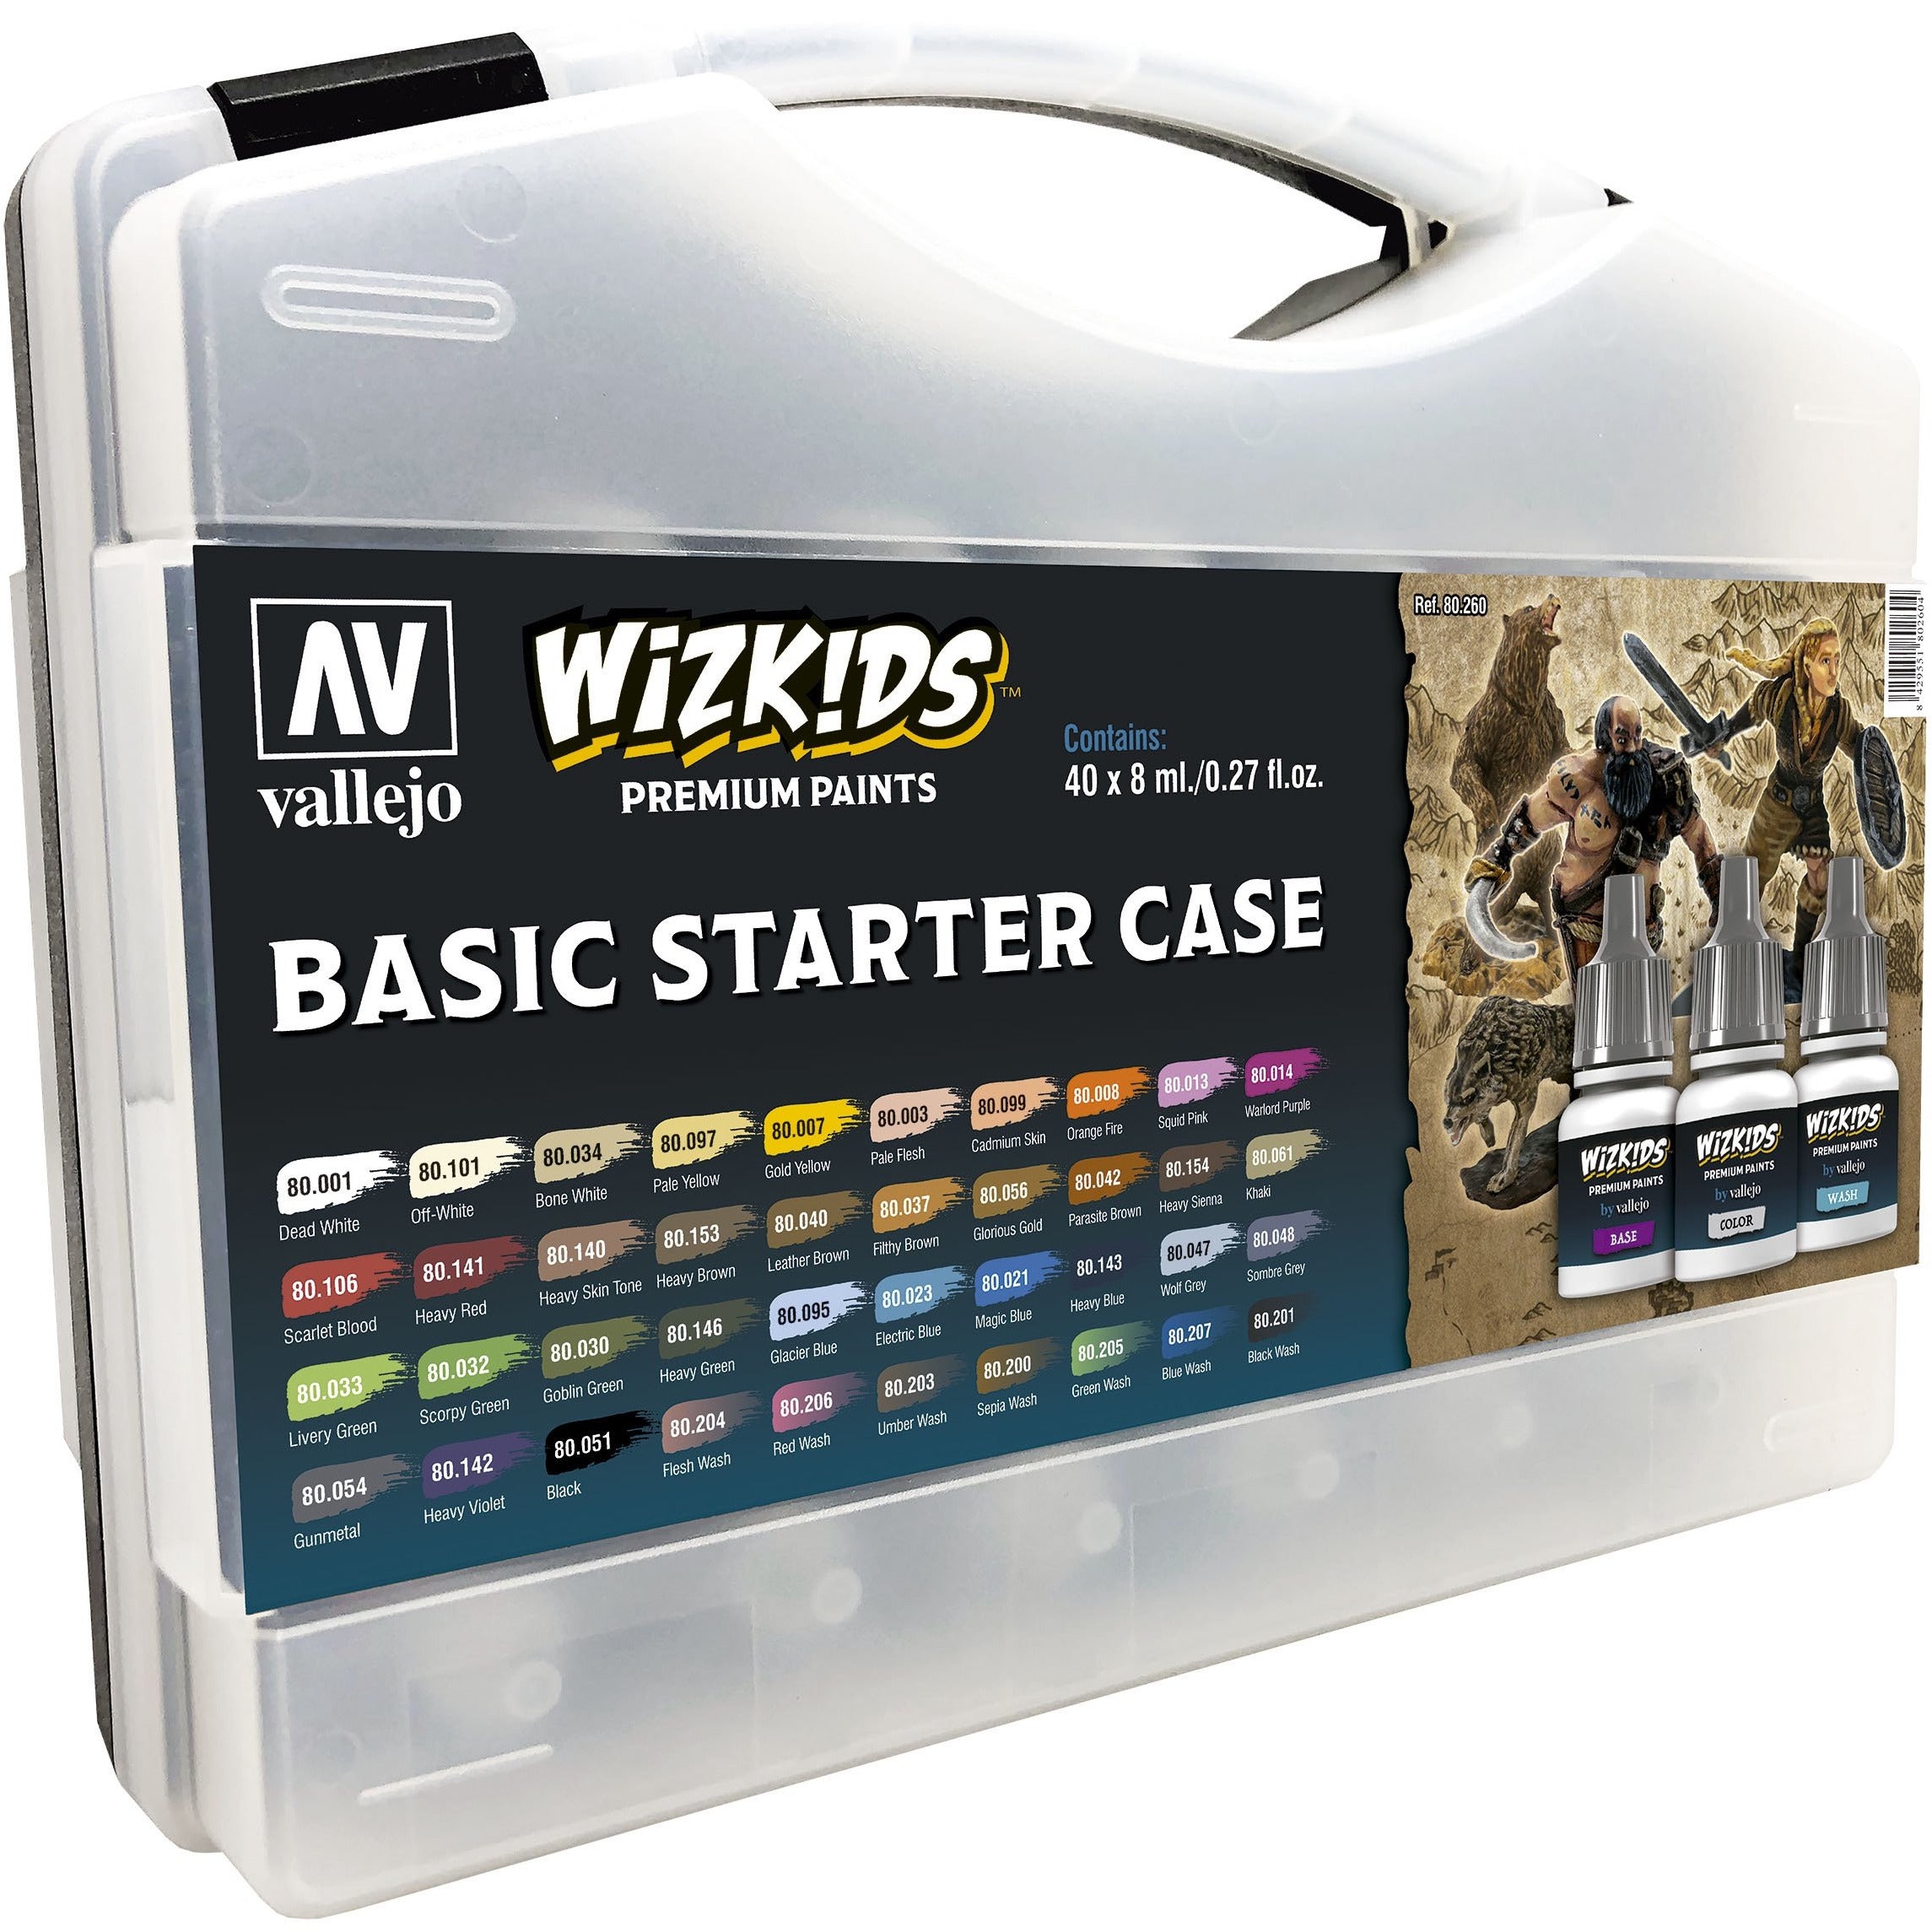 VAL80260 WiZKIDS Basic Starter Case of 40 Premium Paints